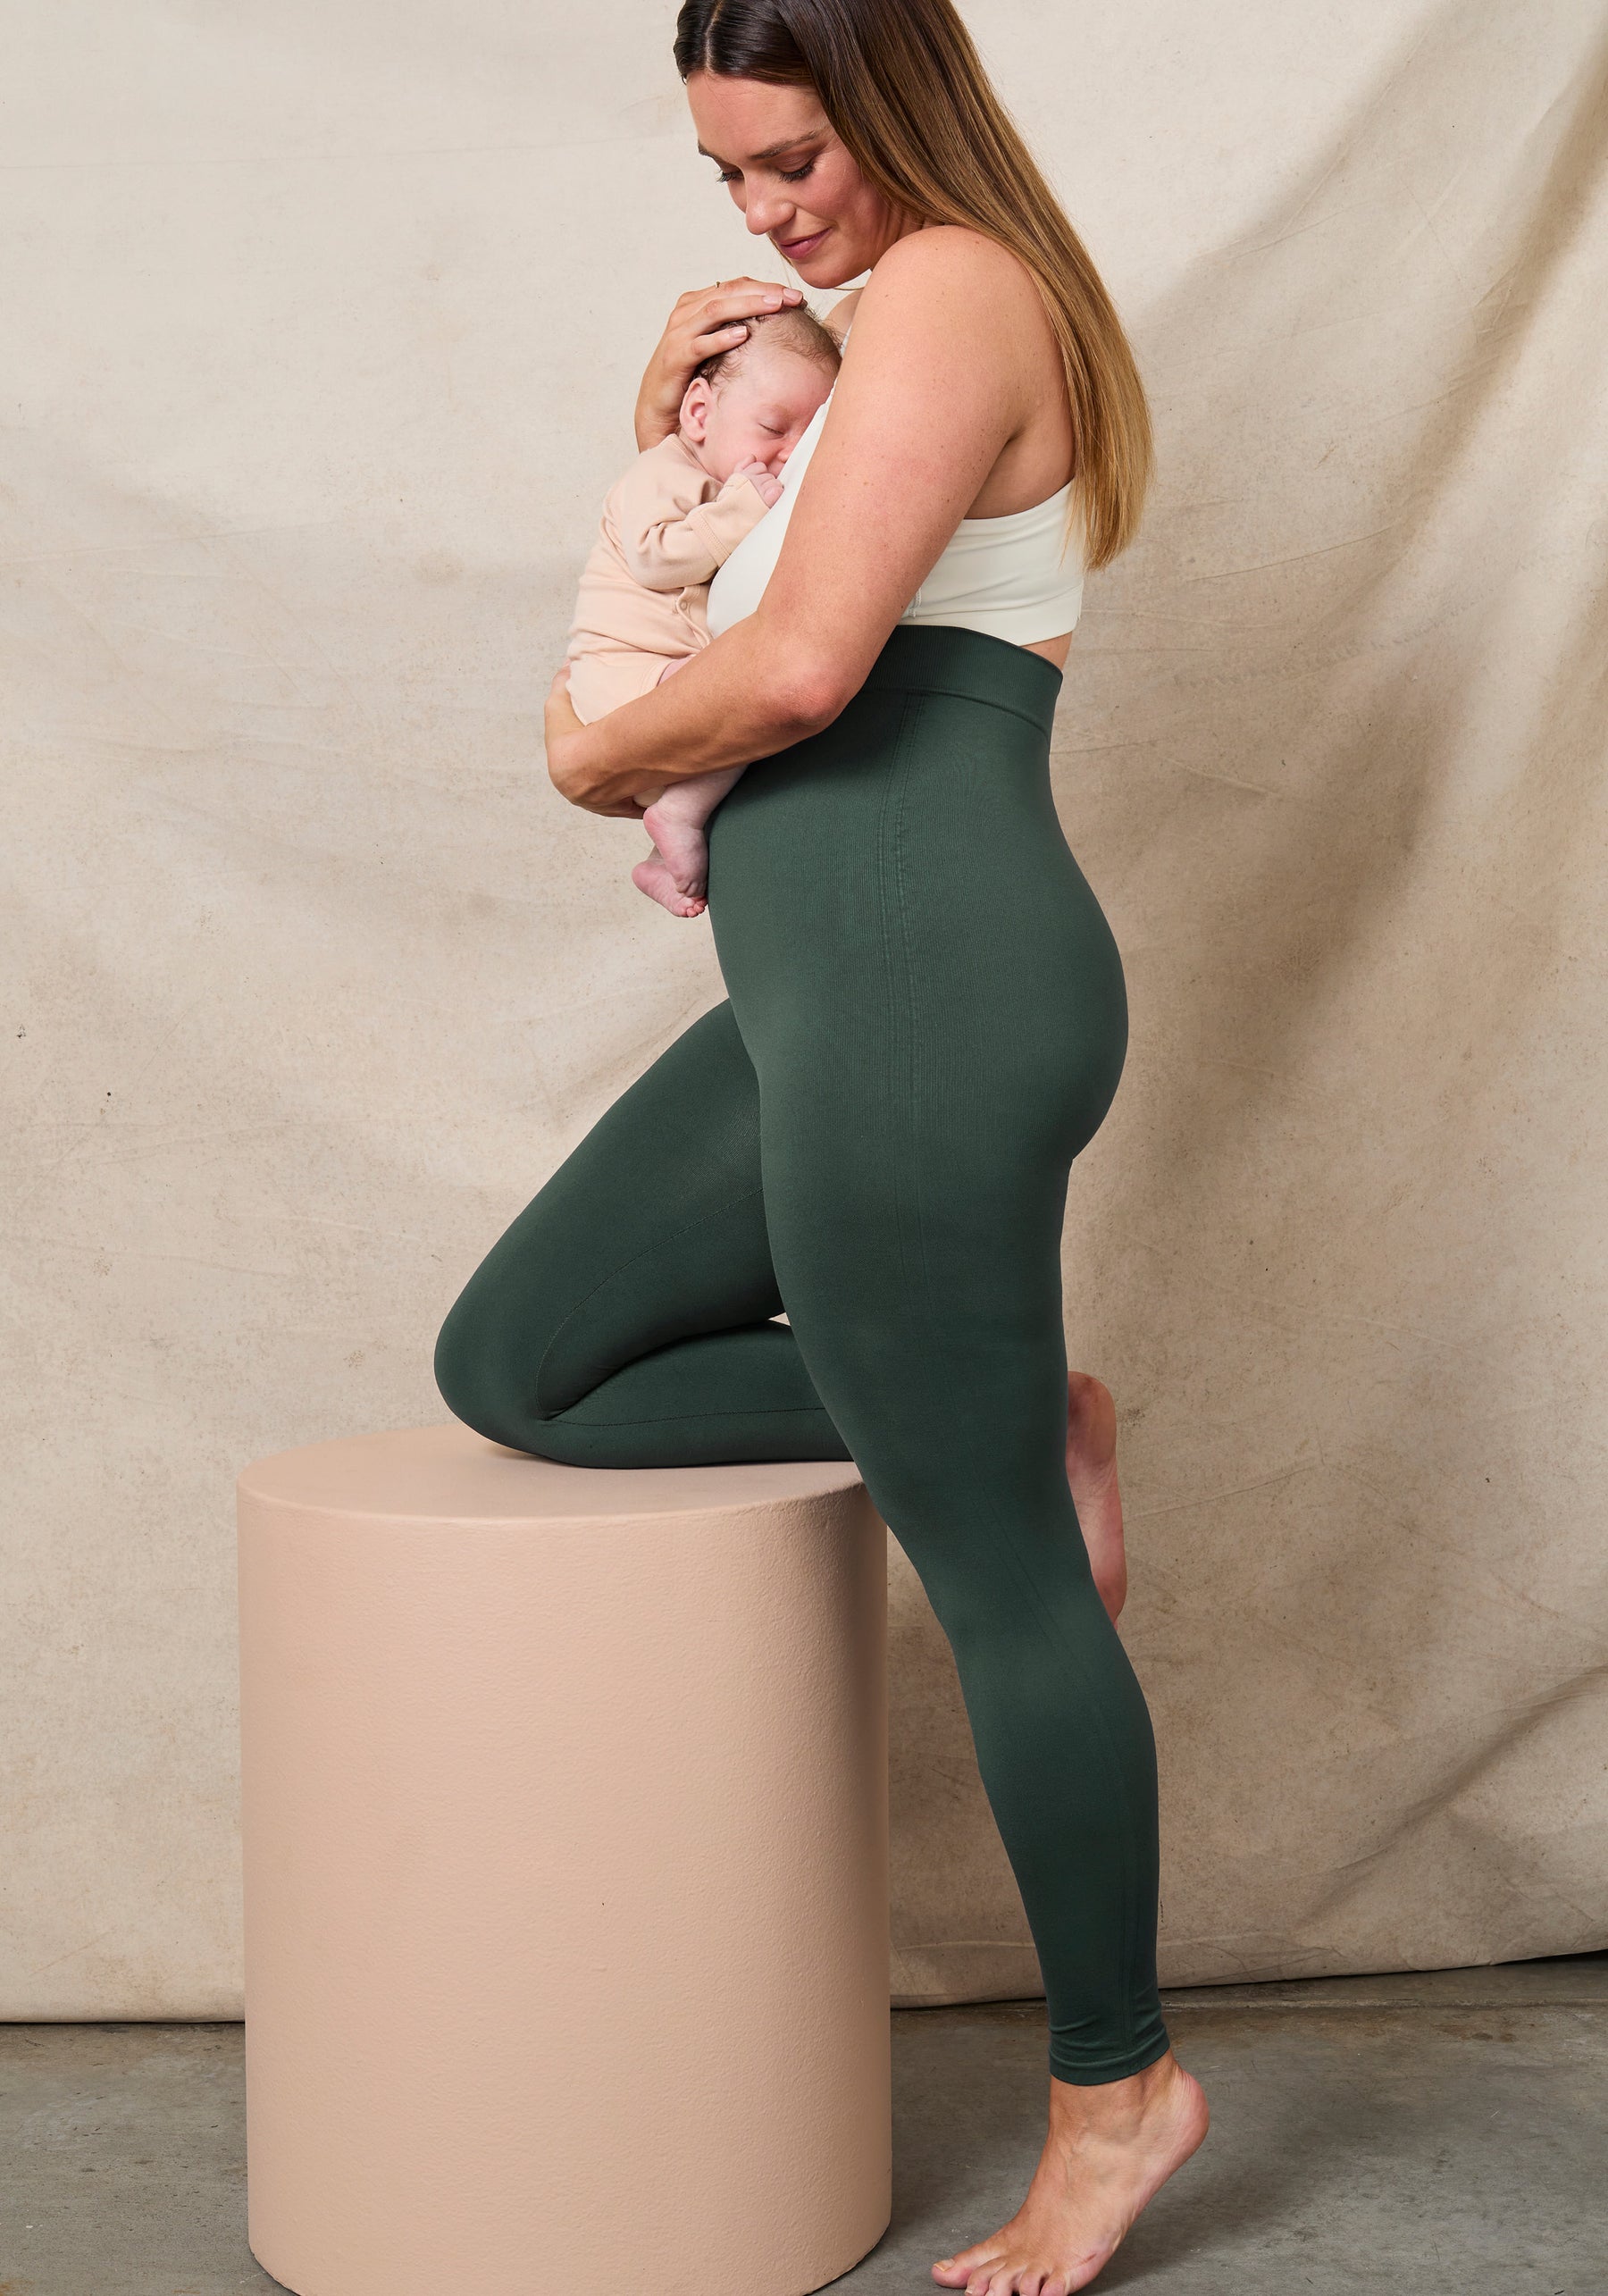 Reveal Ultra High Waisted Tummy Control Postpartum Legging 25